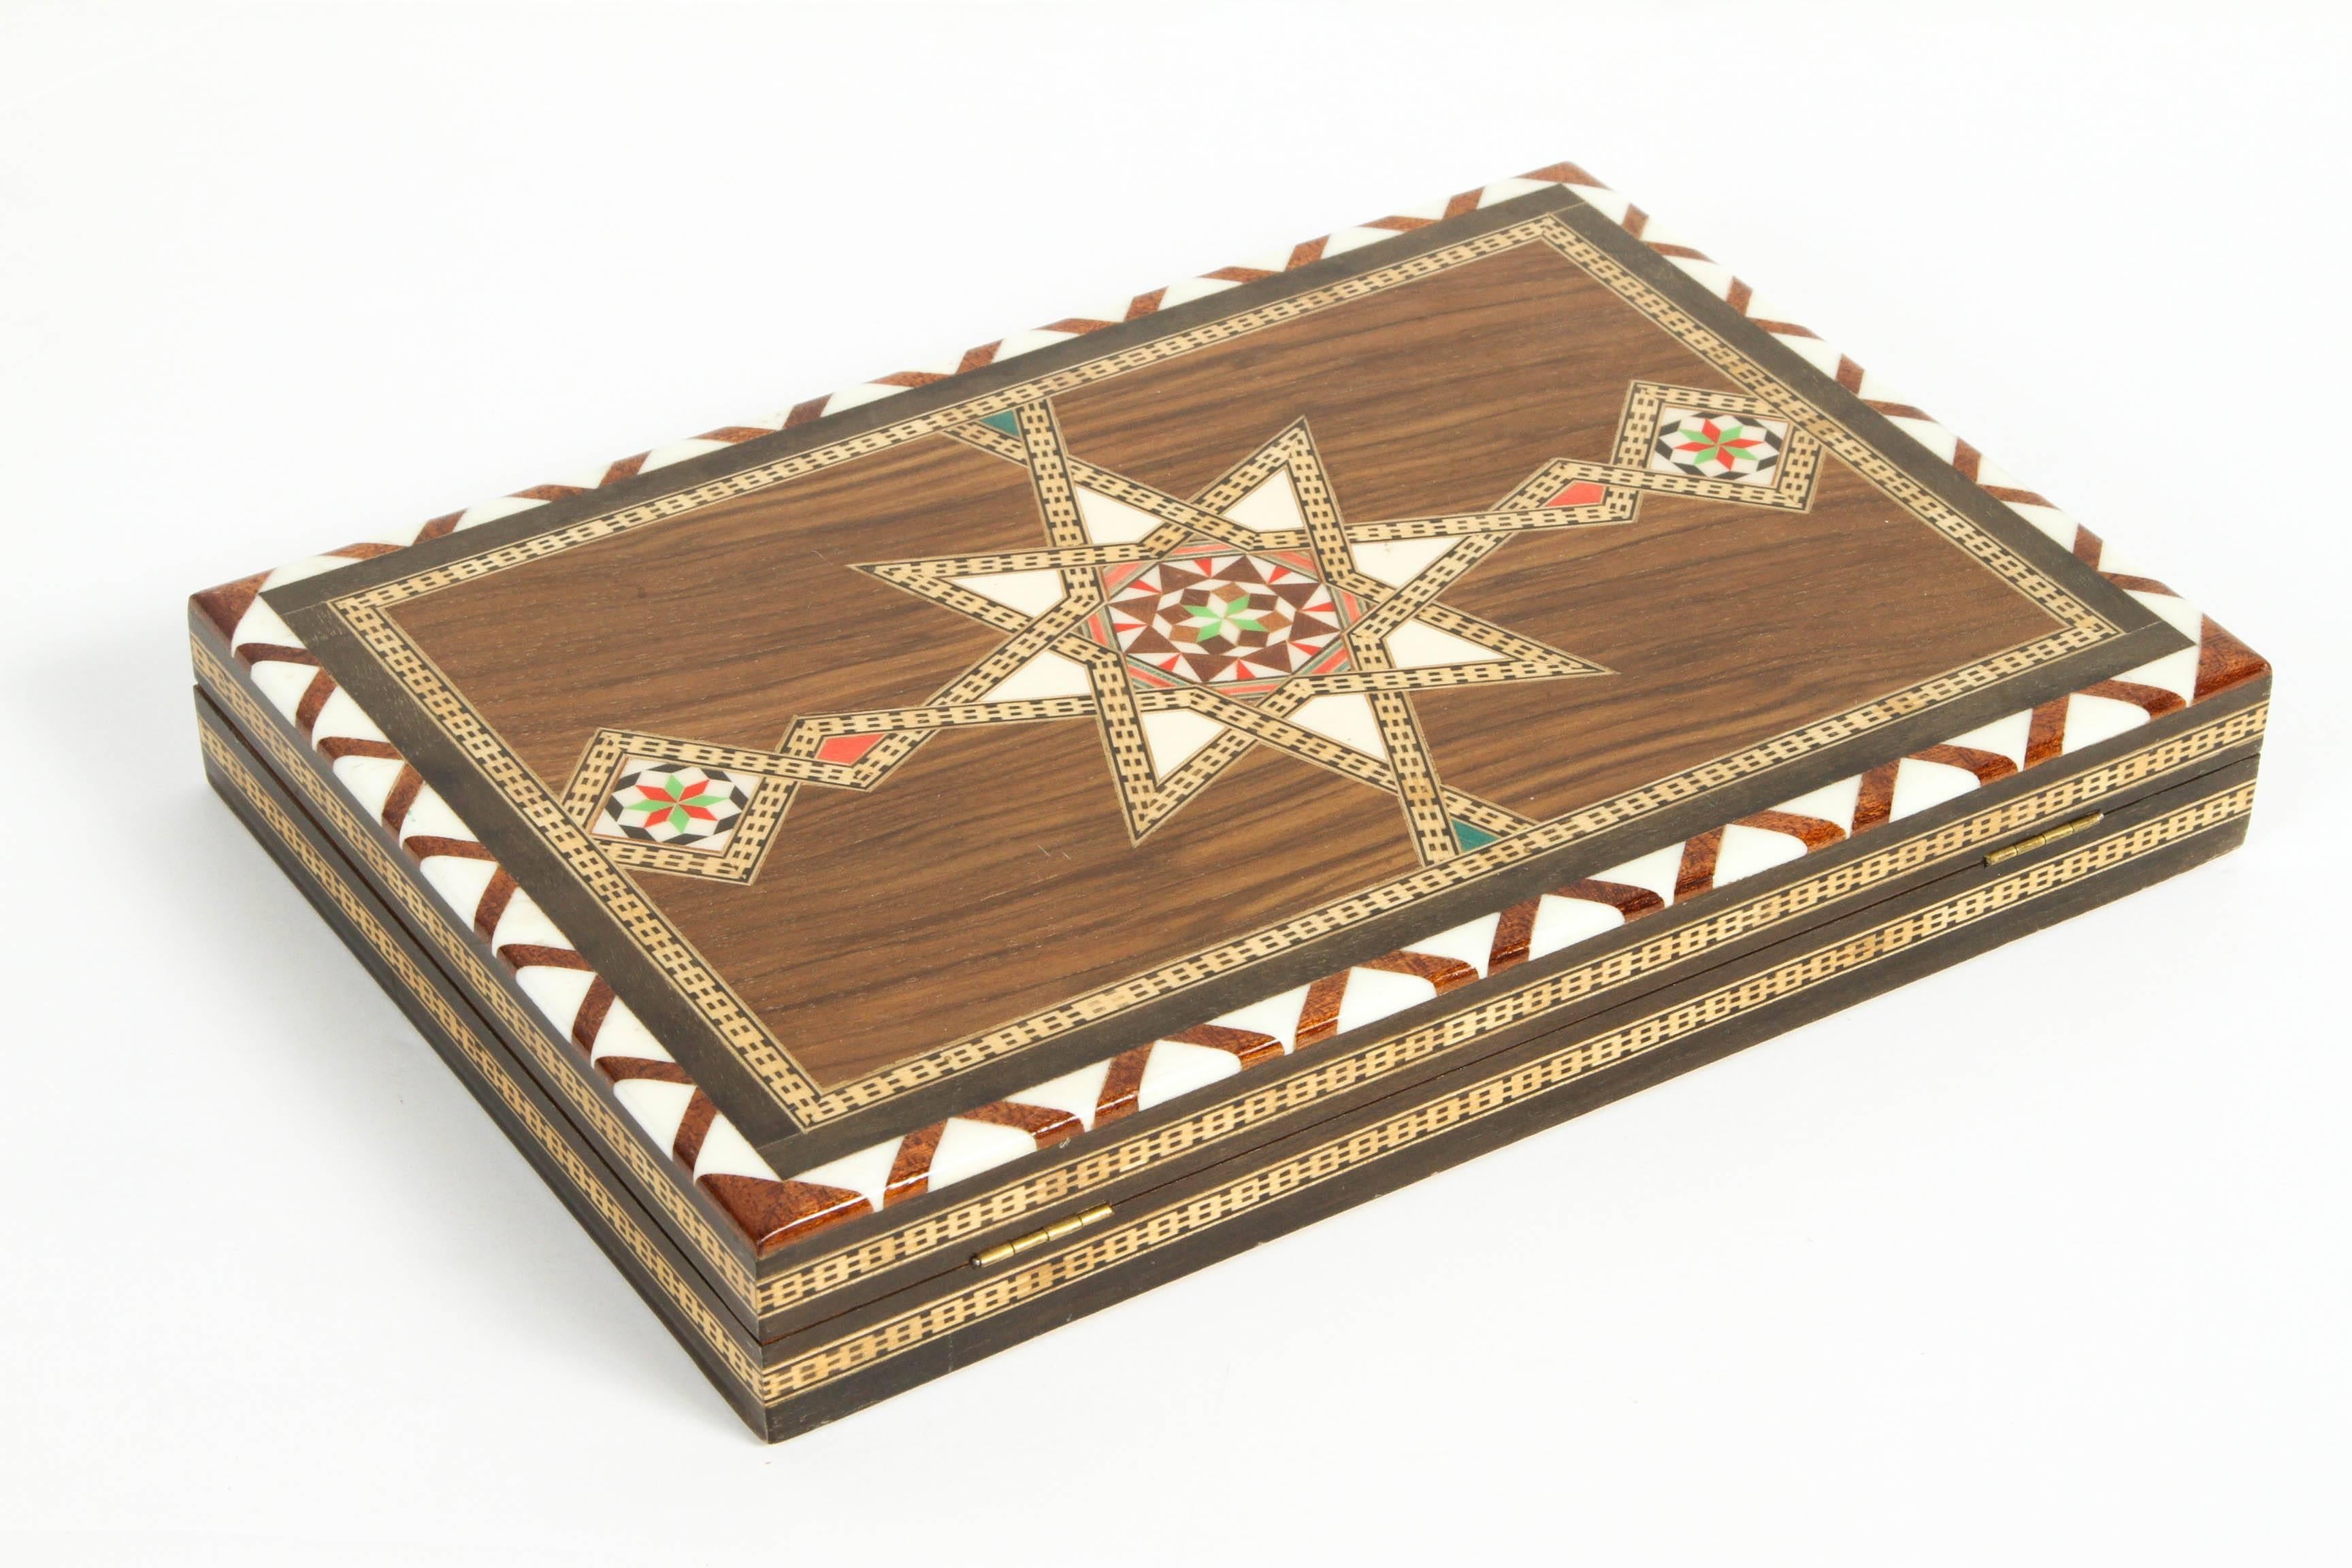 Moorish Middle Eastern Syrian Inlaid Backgammon Game